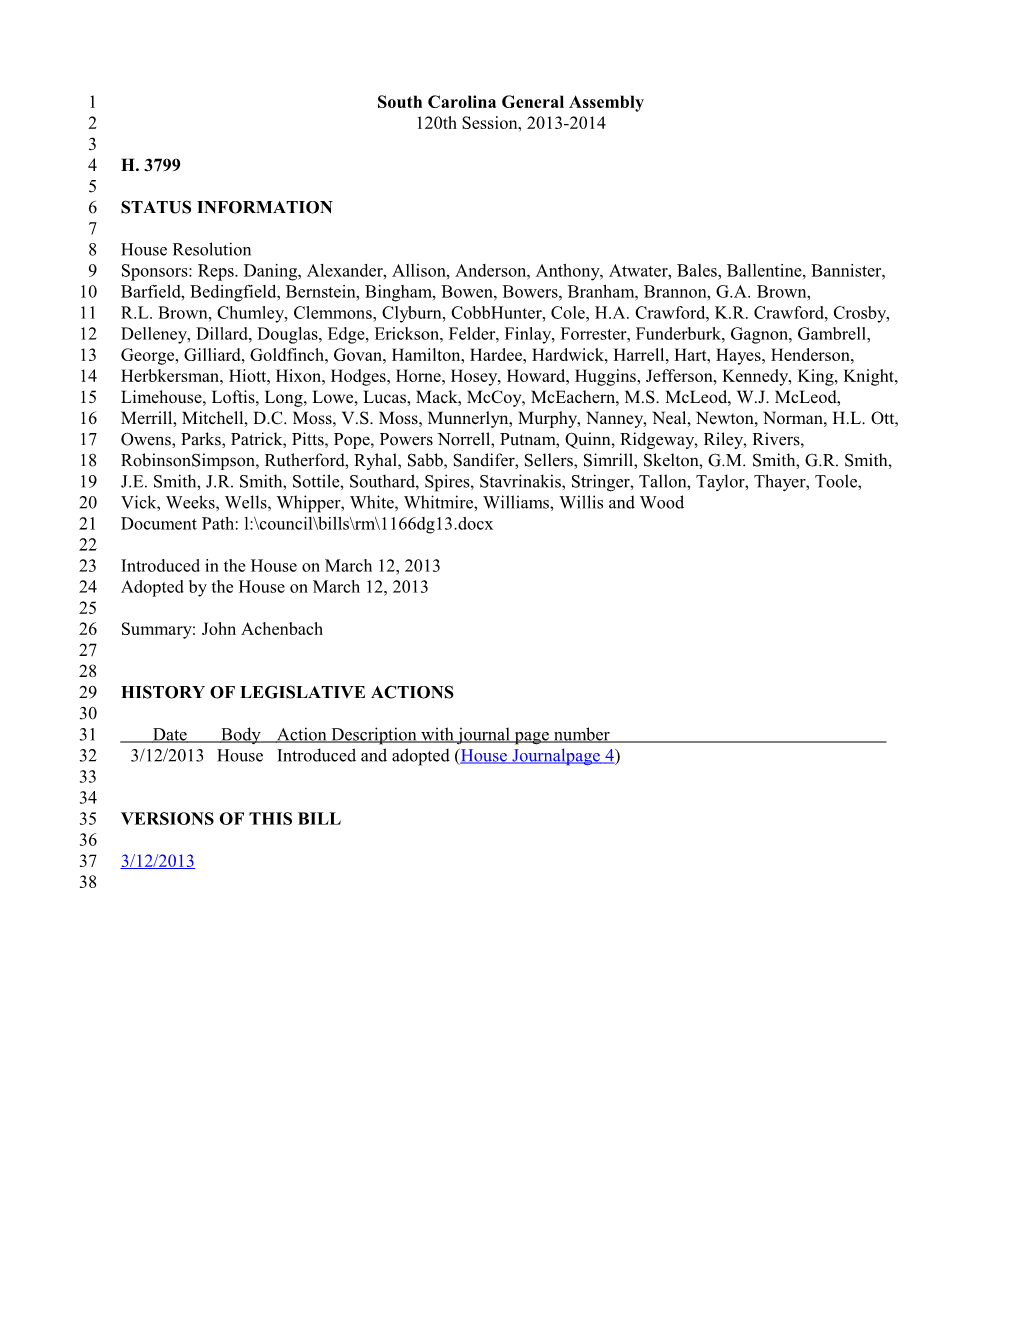 2013-2014 Bill 3799: John Achenbach - South Carolina Legislature Online